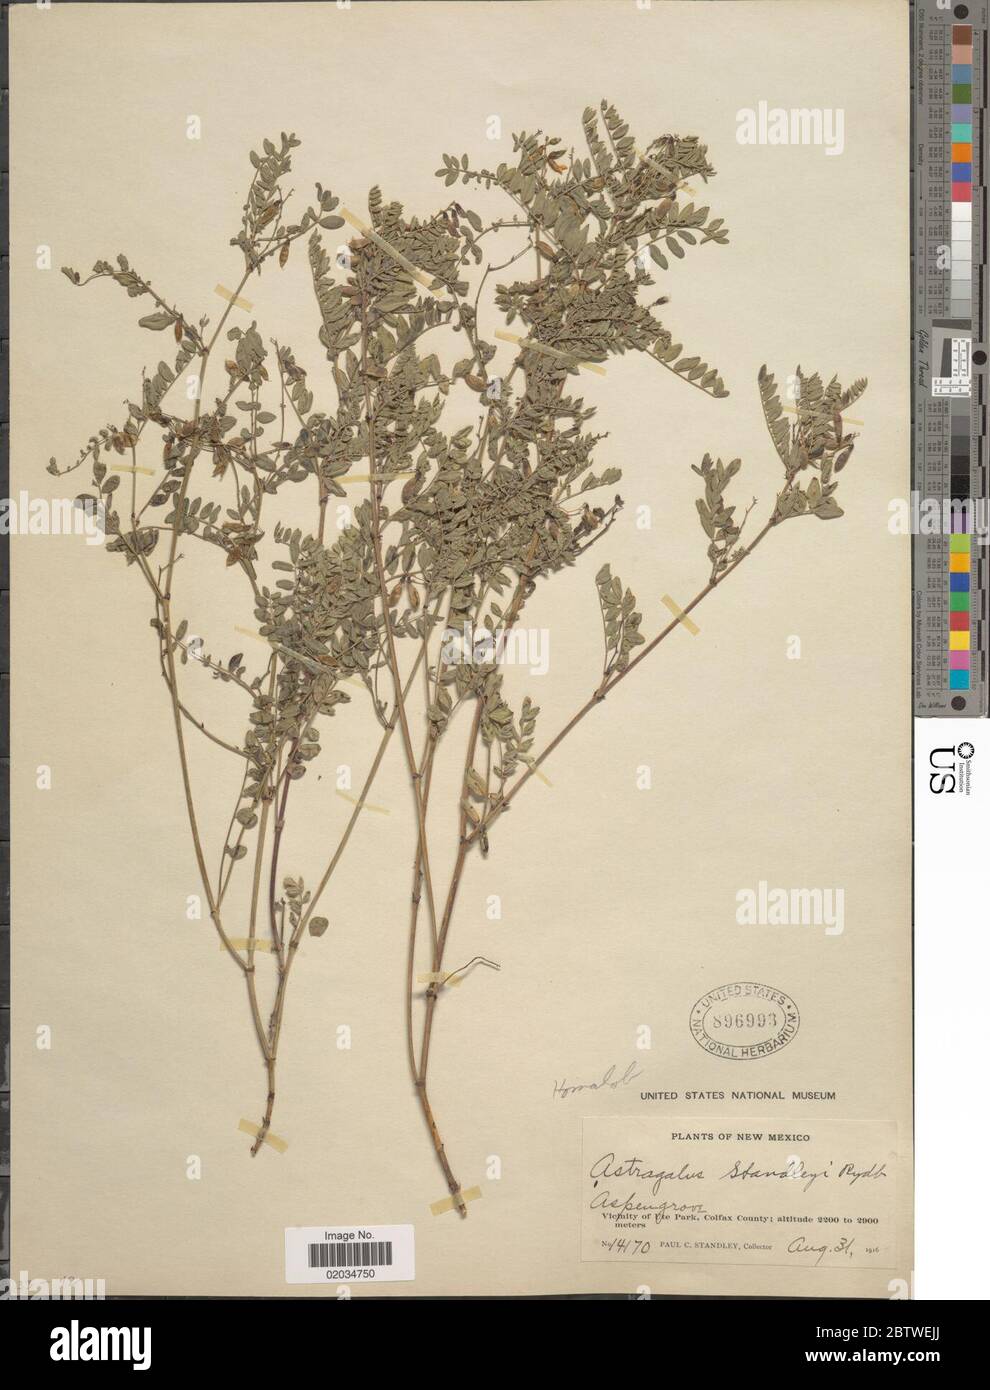 Astragalus standleyi. Stock Photo